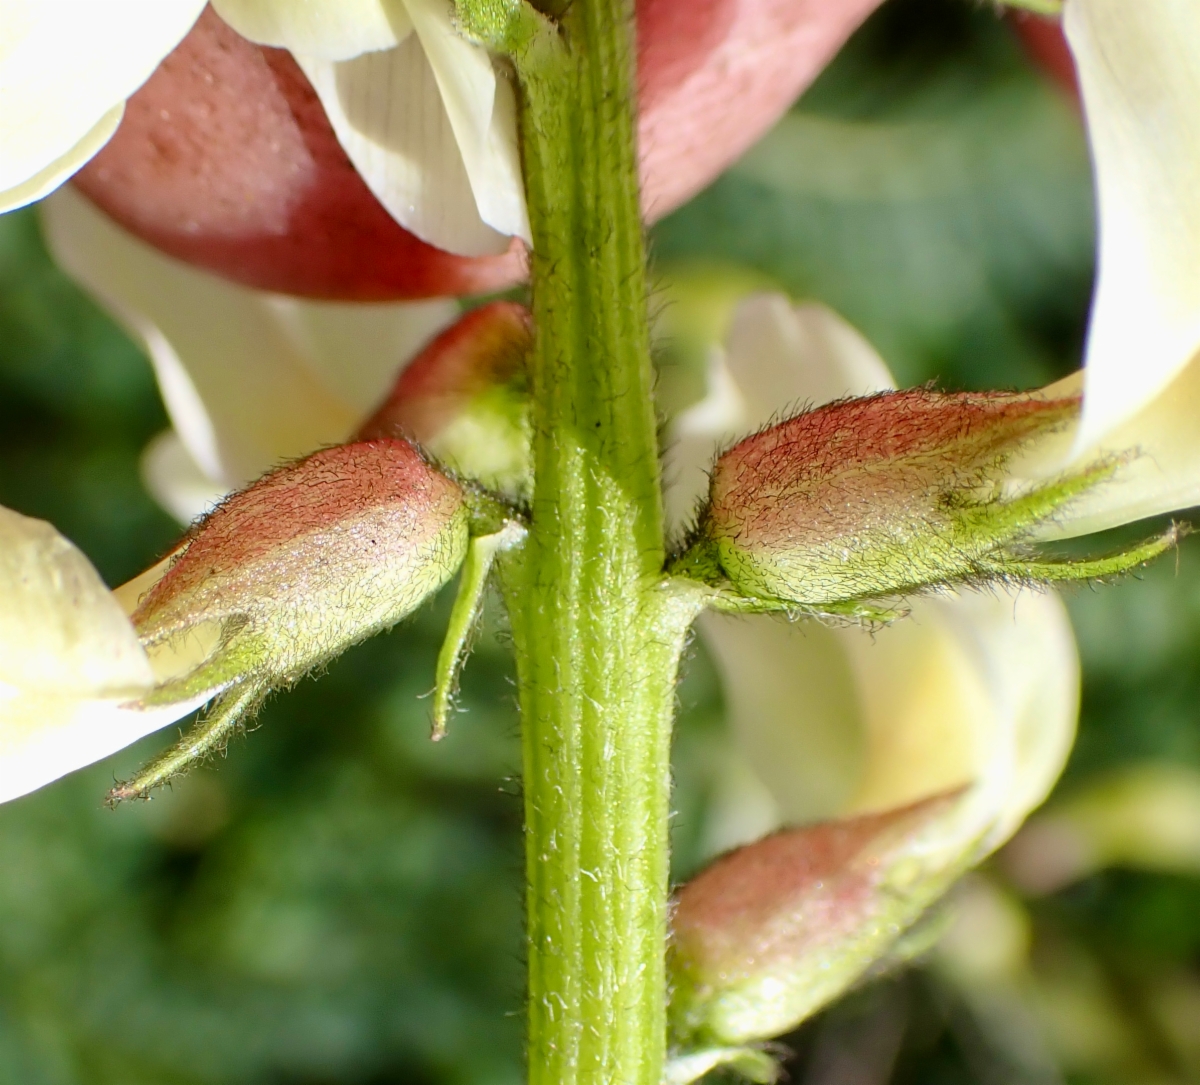 Astragalus congdonii